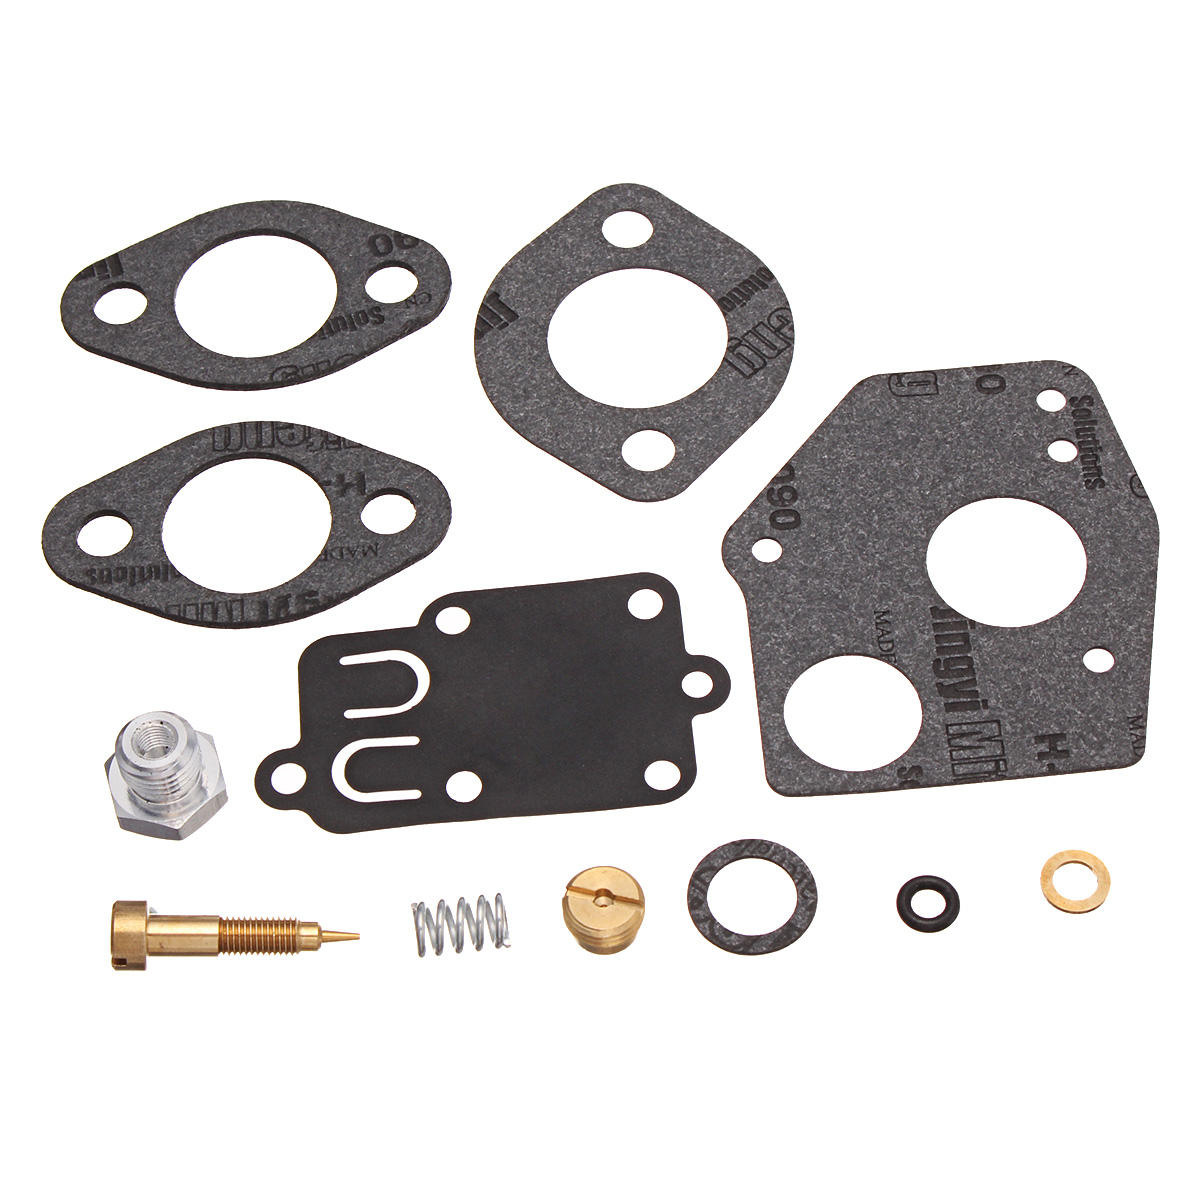 Carburetor Rebuild Kit For Briggs Stratton 494624 495606 # 3HP 4HP 5HP Engine